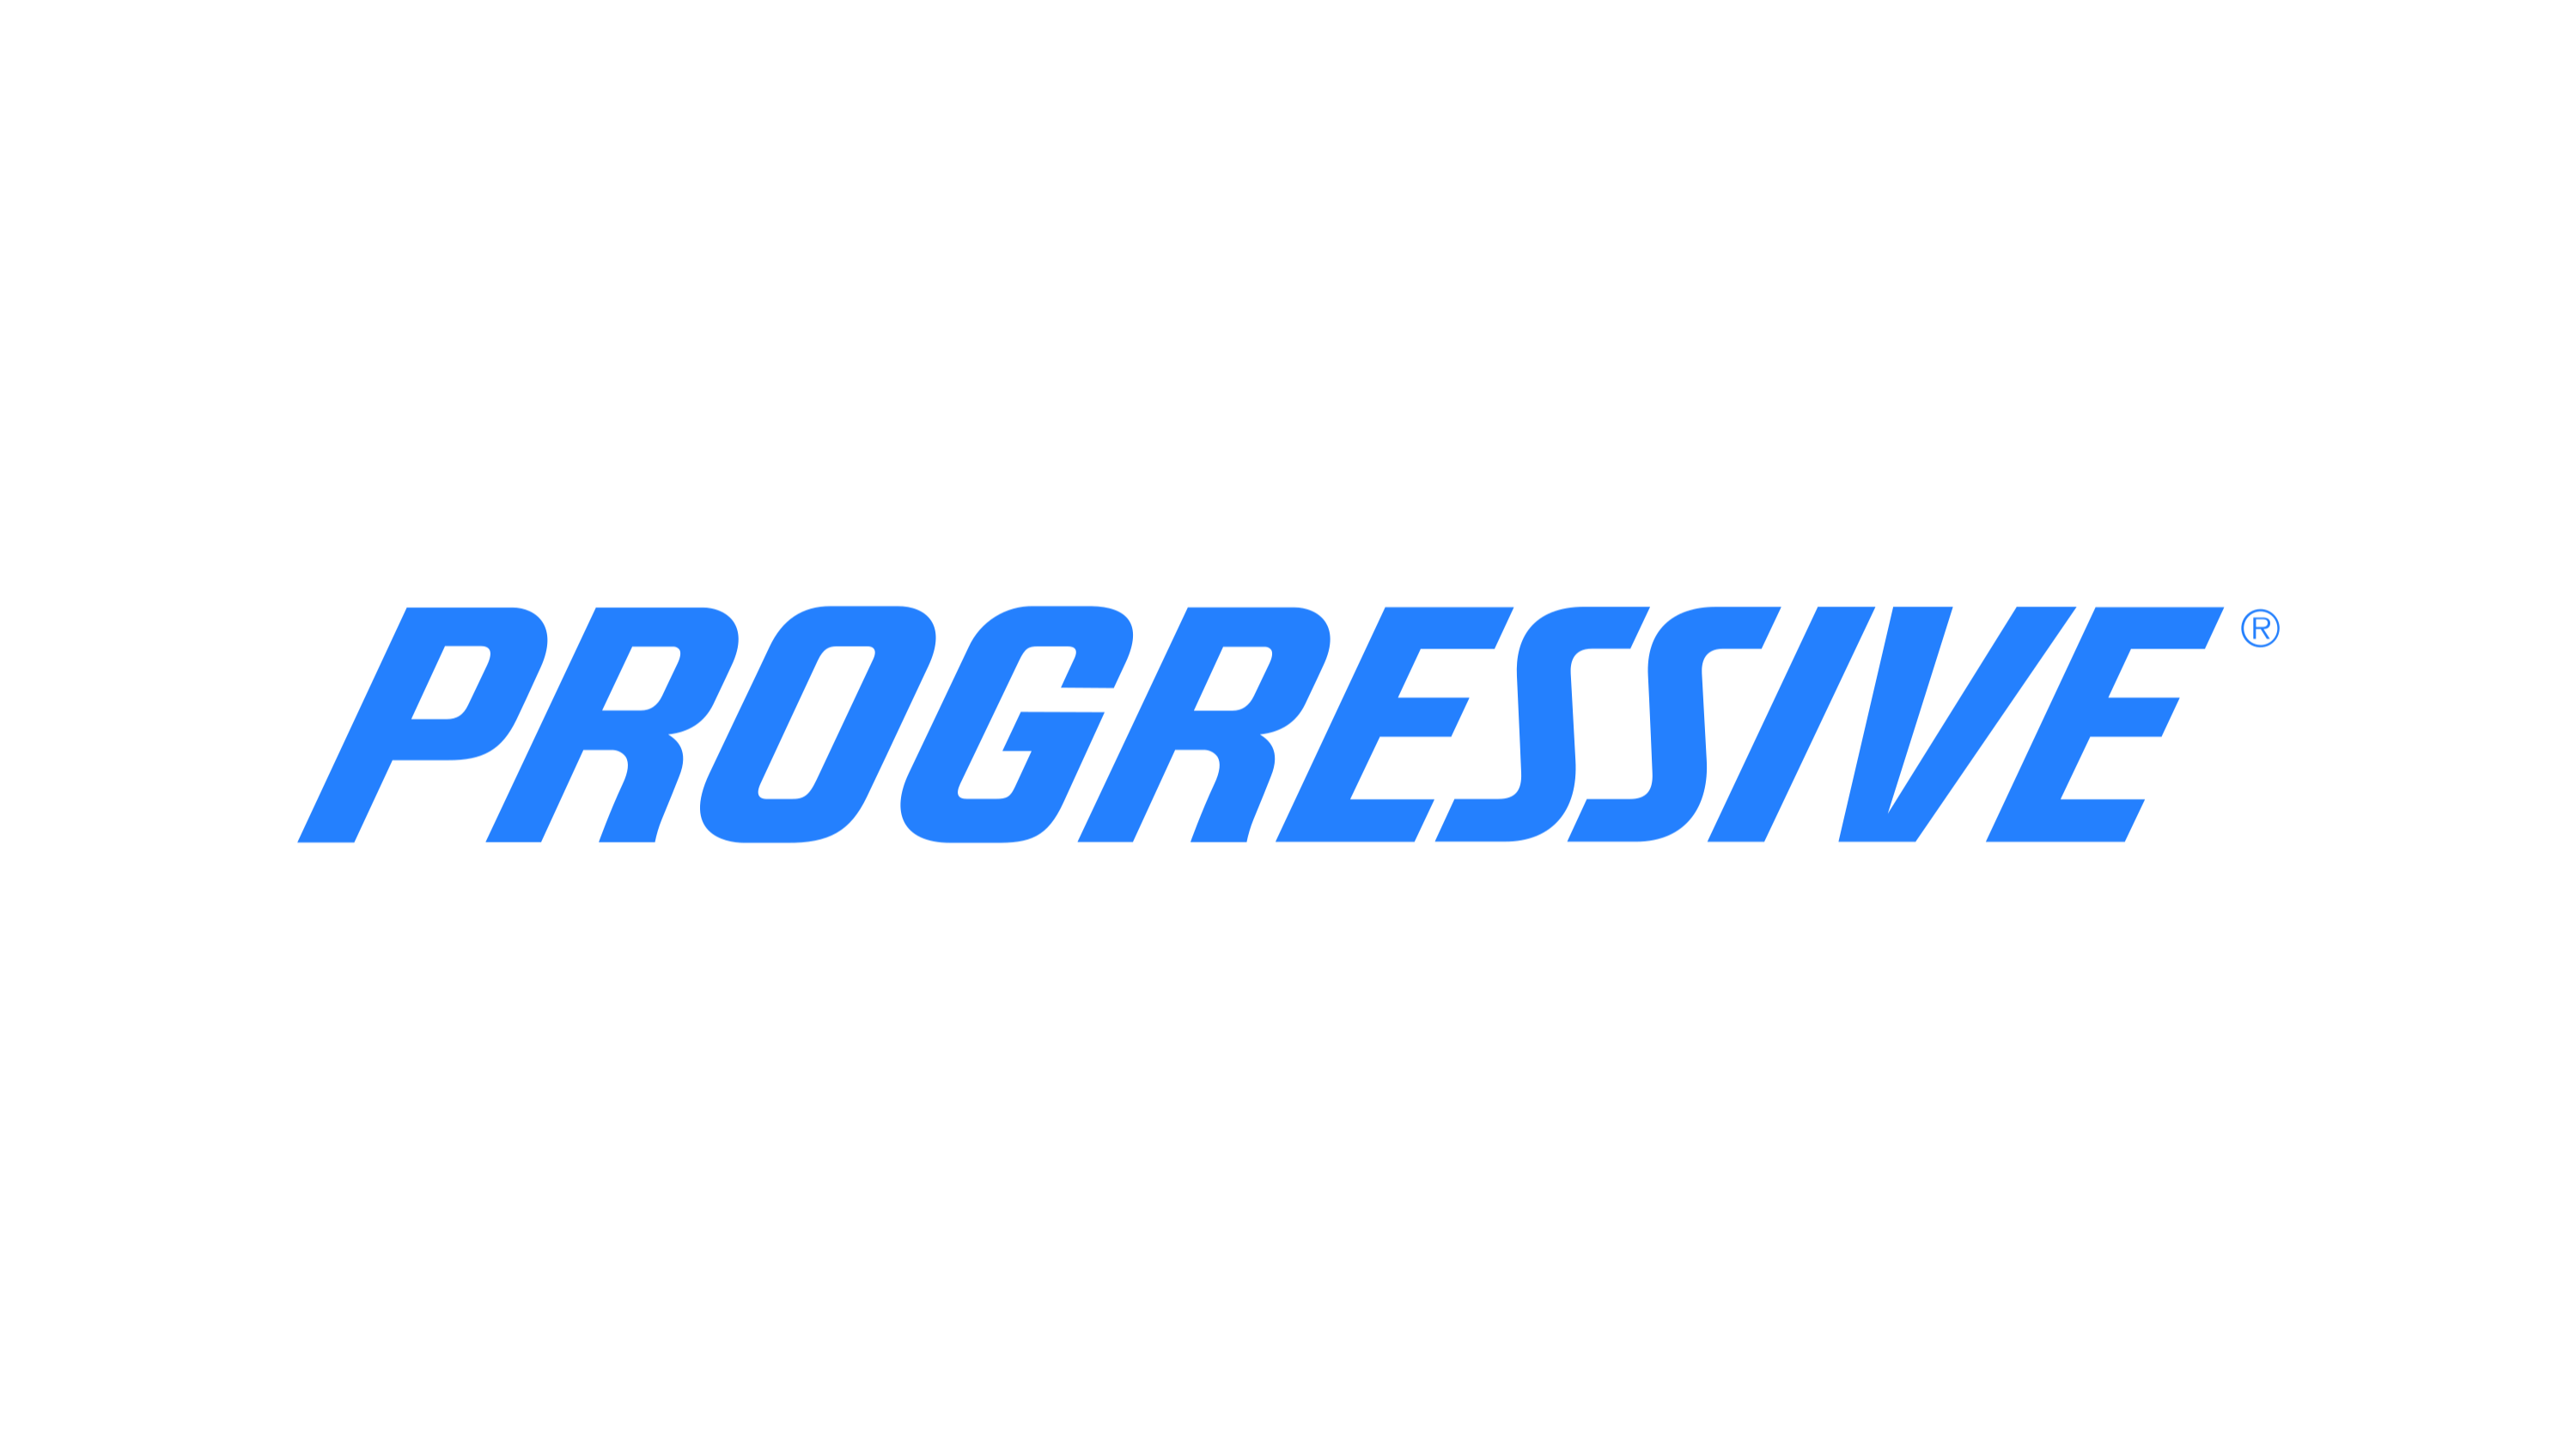 Progressive logo newer